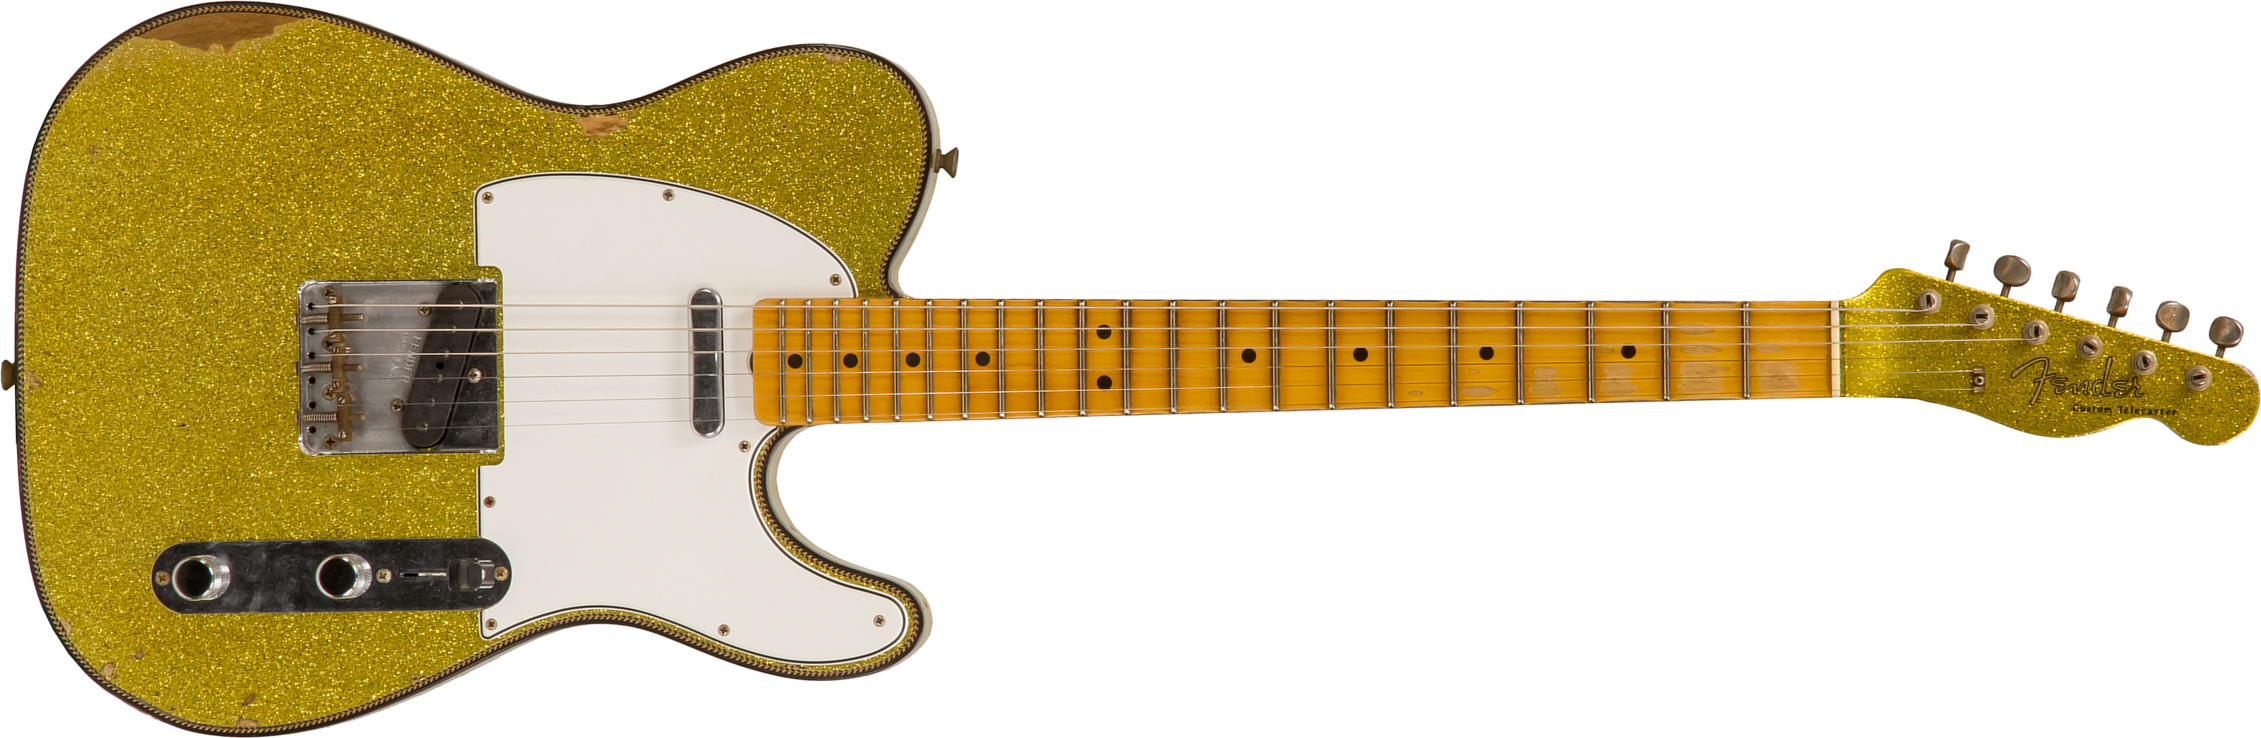 Fender Custom Shop Tele Custom 1963 2020 Ltd Rw #cz545983 - Relic Chartreuse Sparkle - Tel shape electric guitar - Main picture